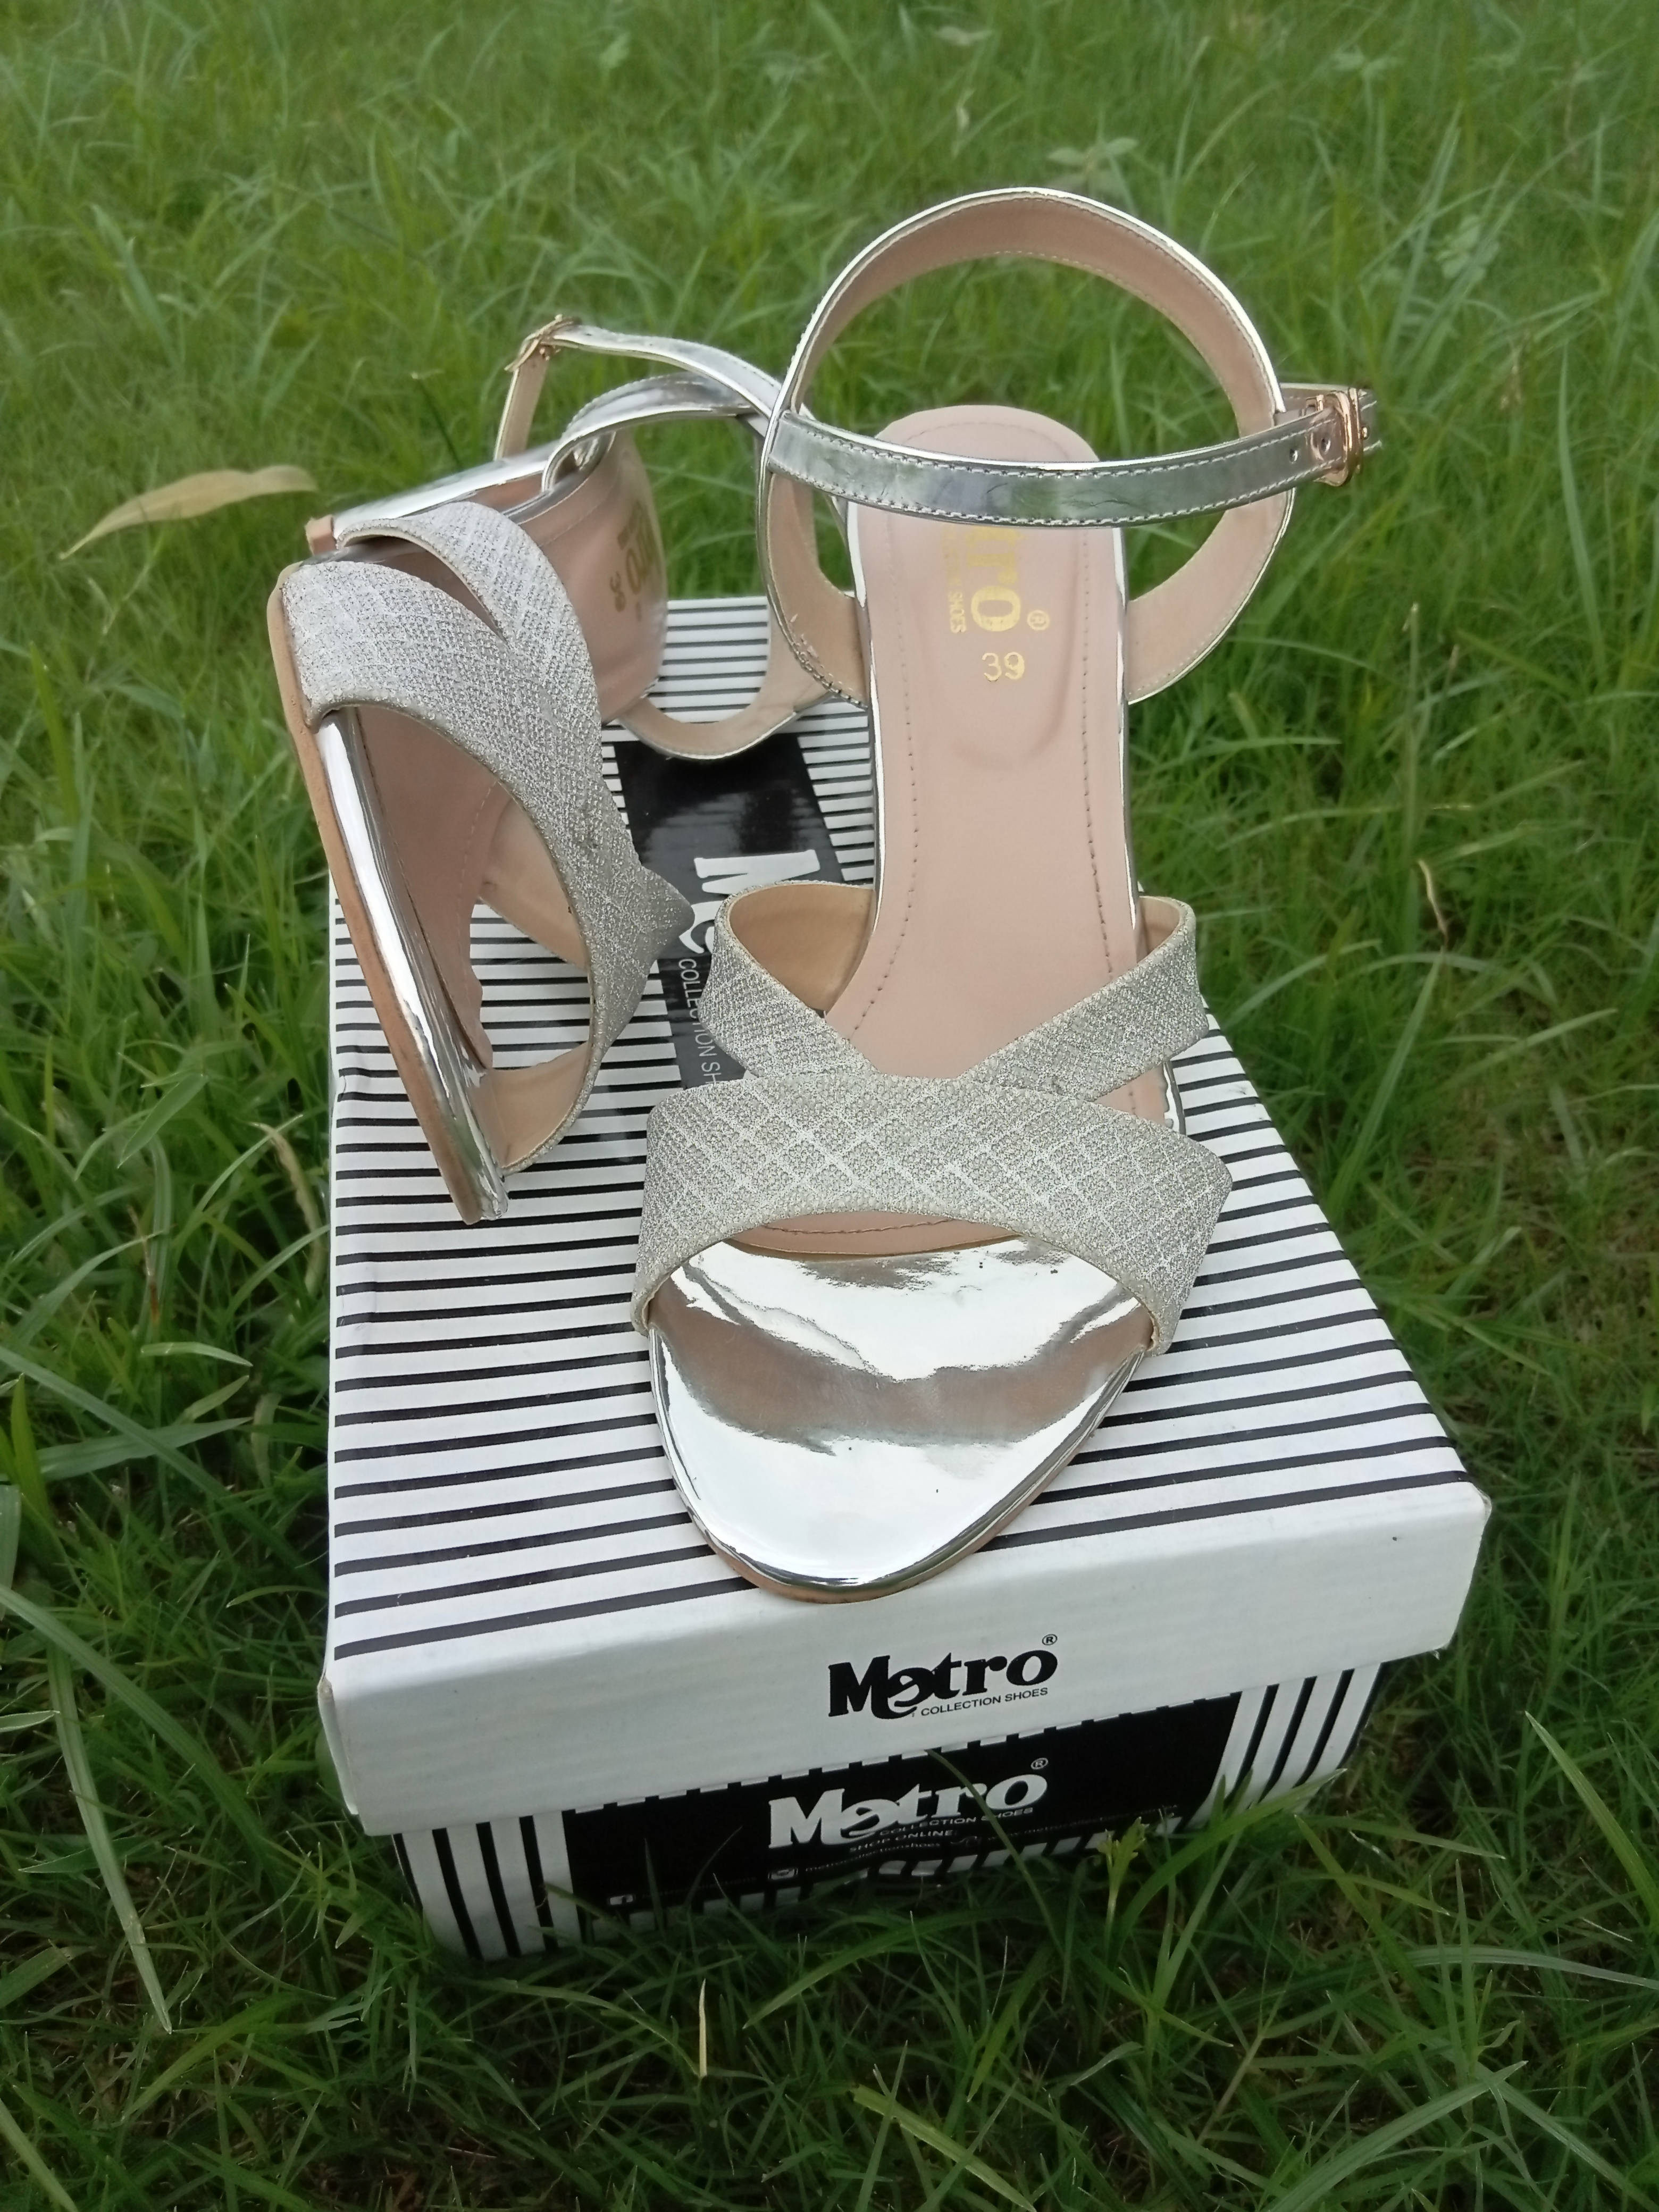 Buy Women Pink Casual Sandals Online | SKU: 40-2237-80-36-Metro Shoes